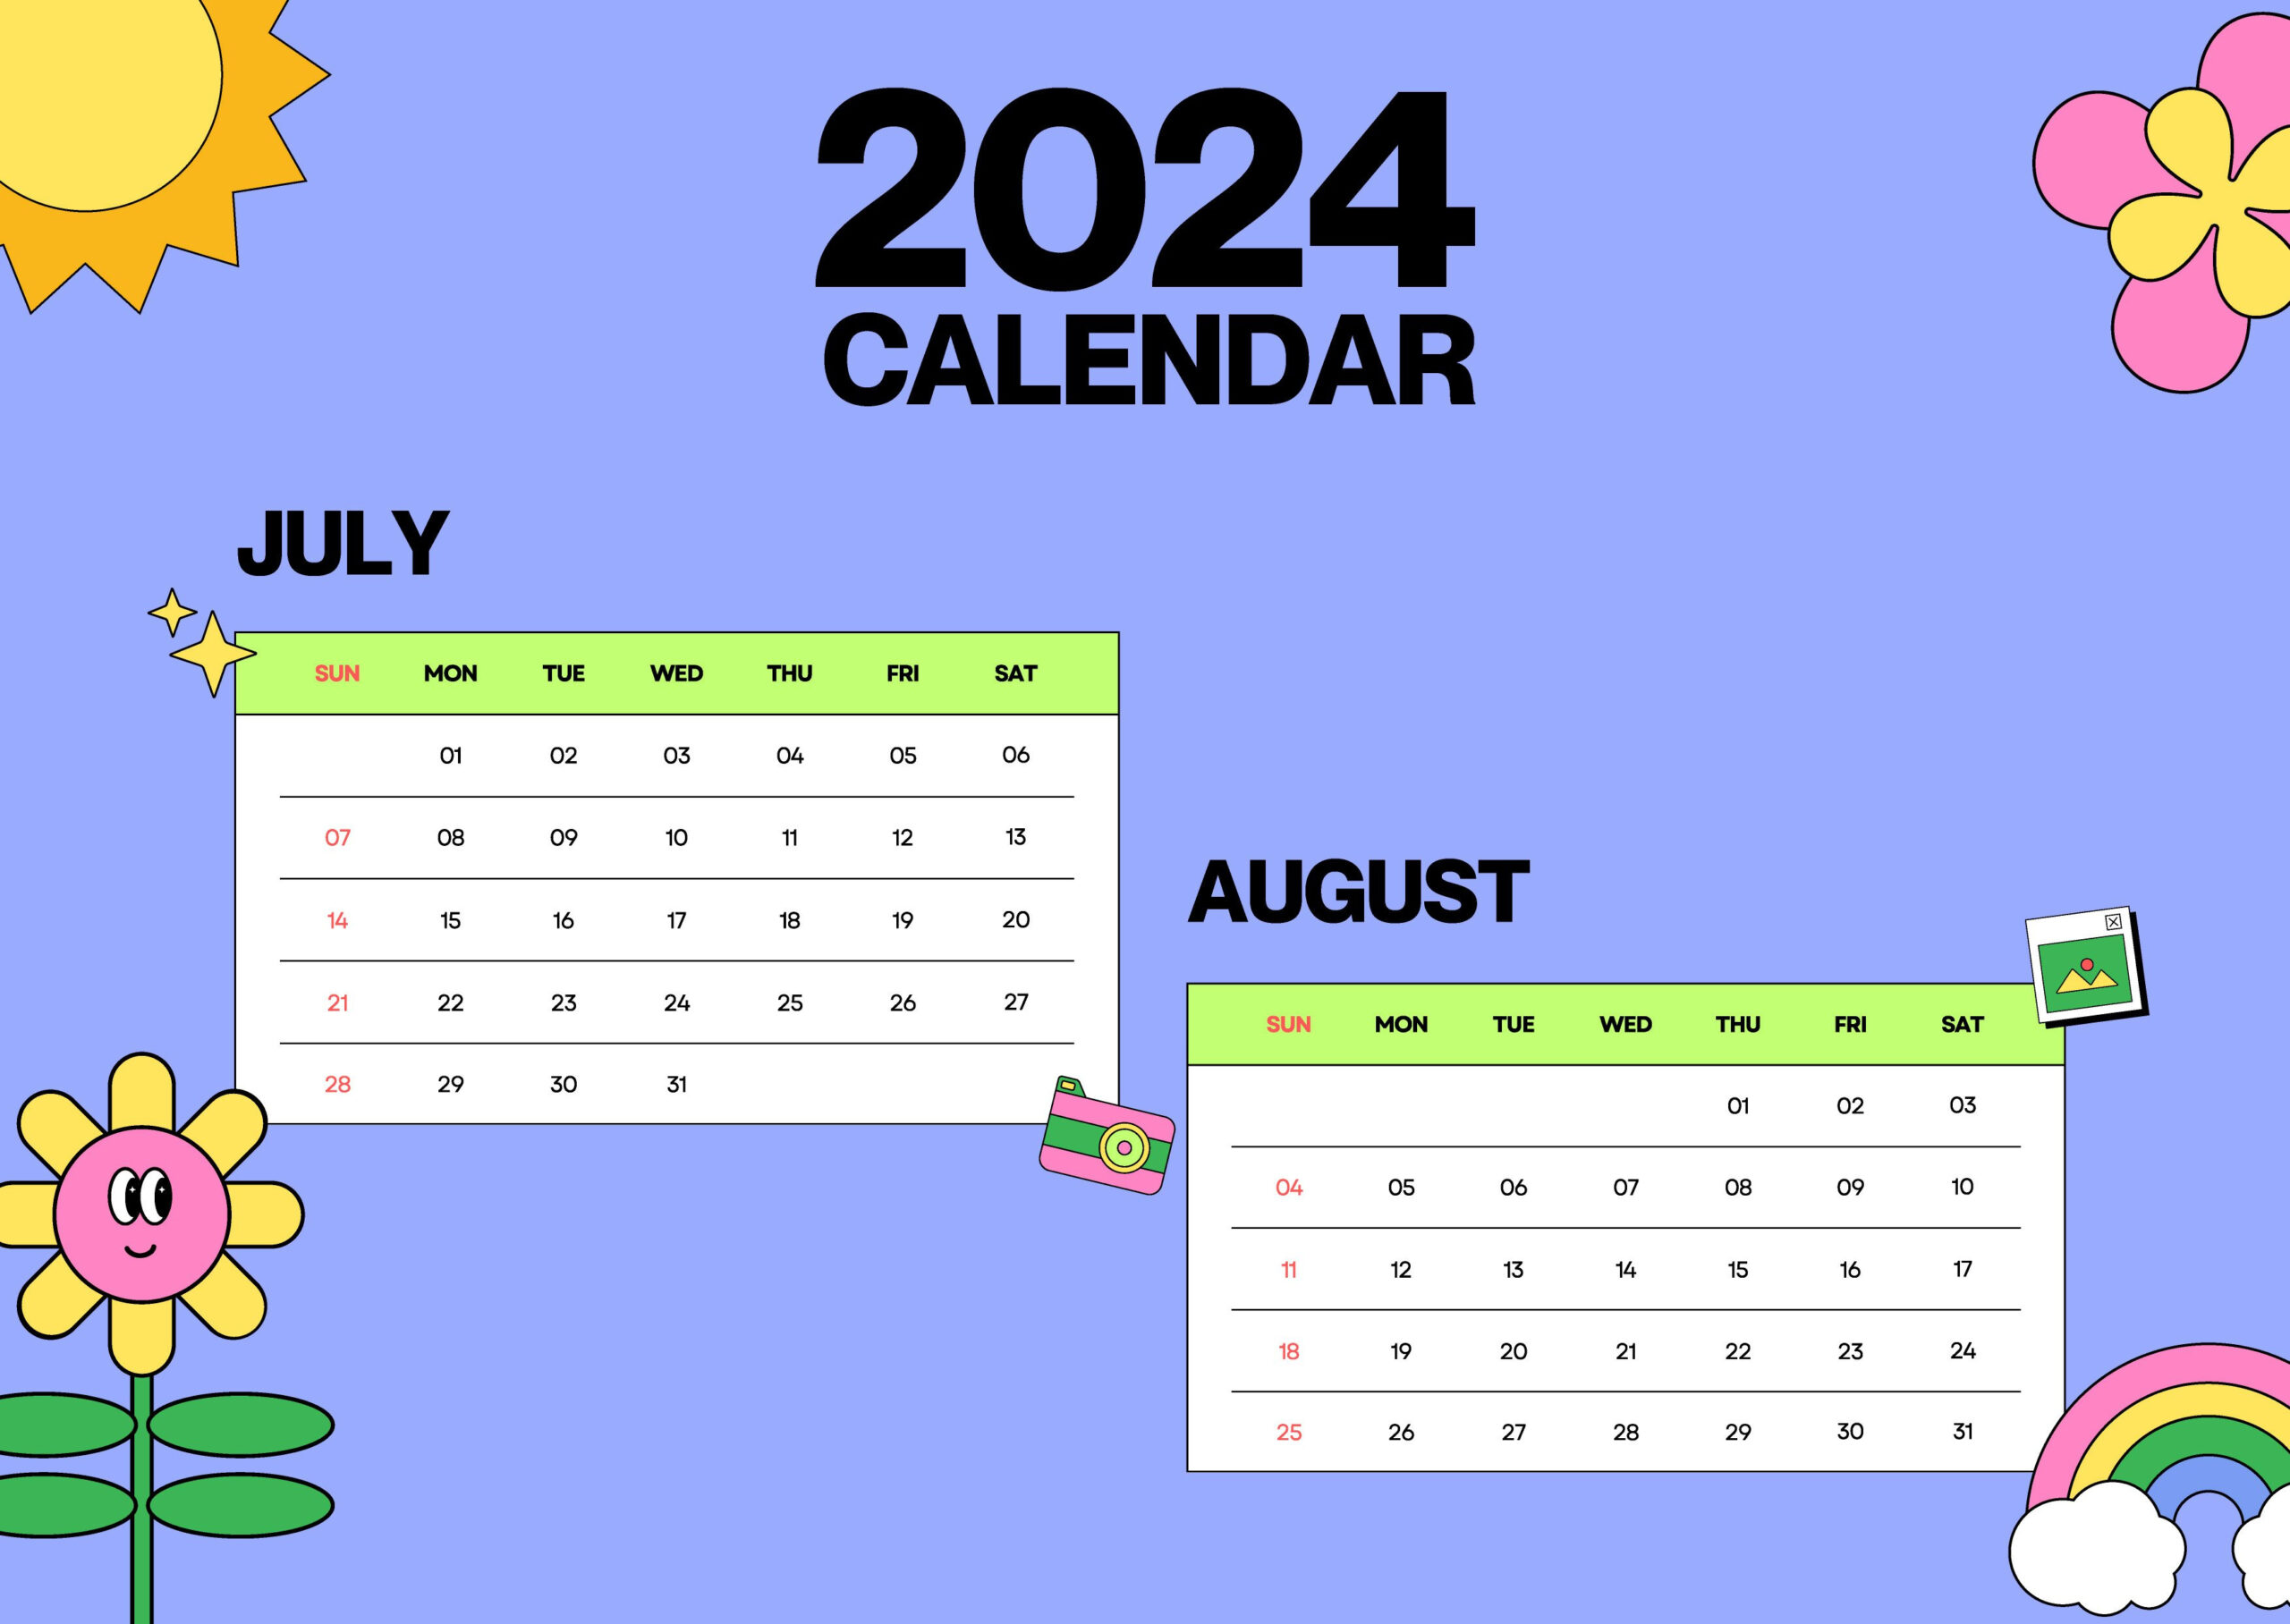 July August 2024 Calendar Template - Edit Online &amp;amp; Download intended for 2024 July August Calendar